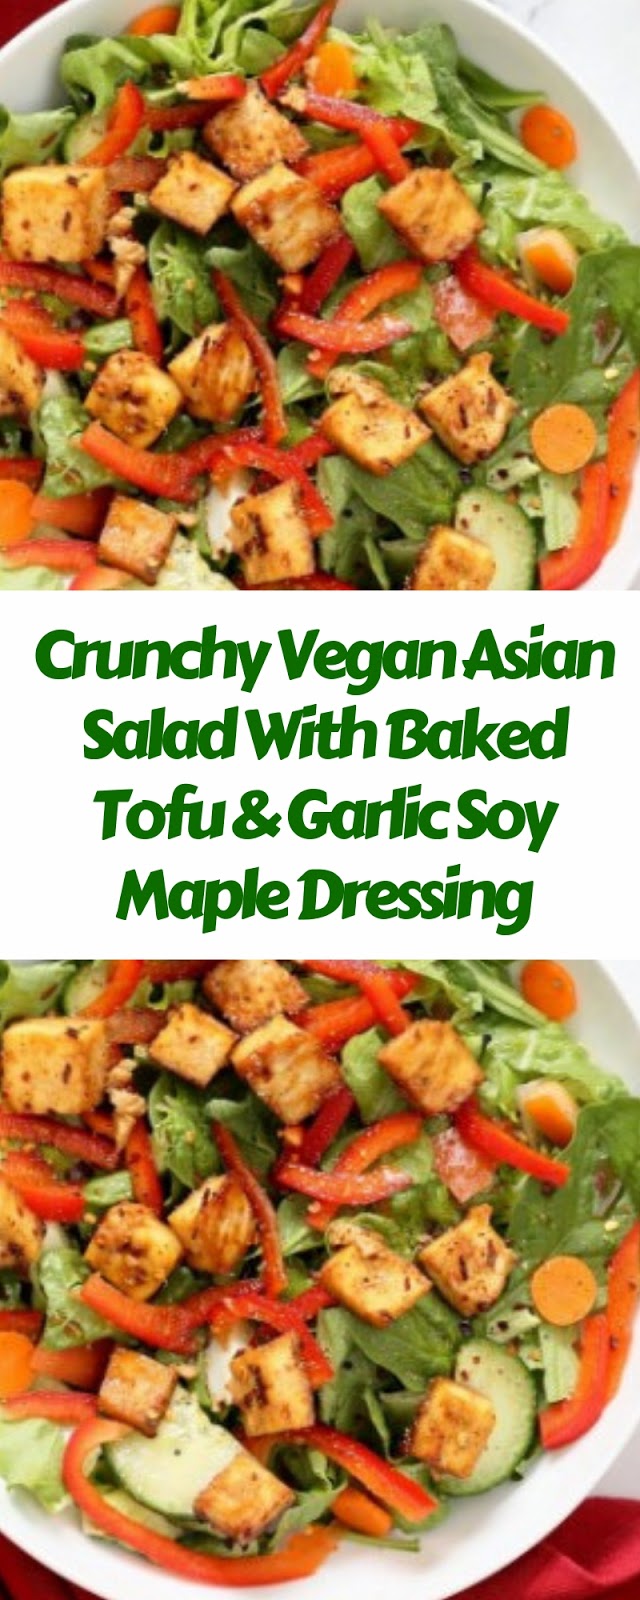 Crunchy Vegan Asian Salad With Baked Tofu & Garlic Soy Maple Dressing